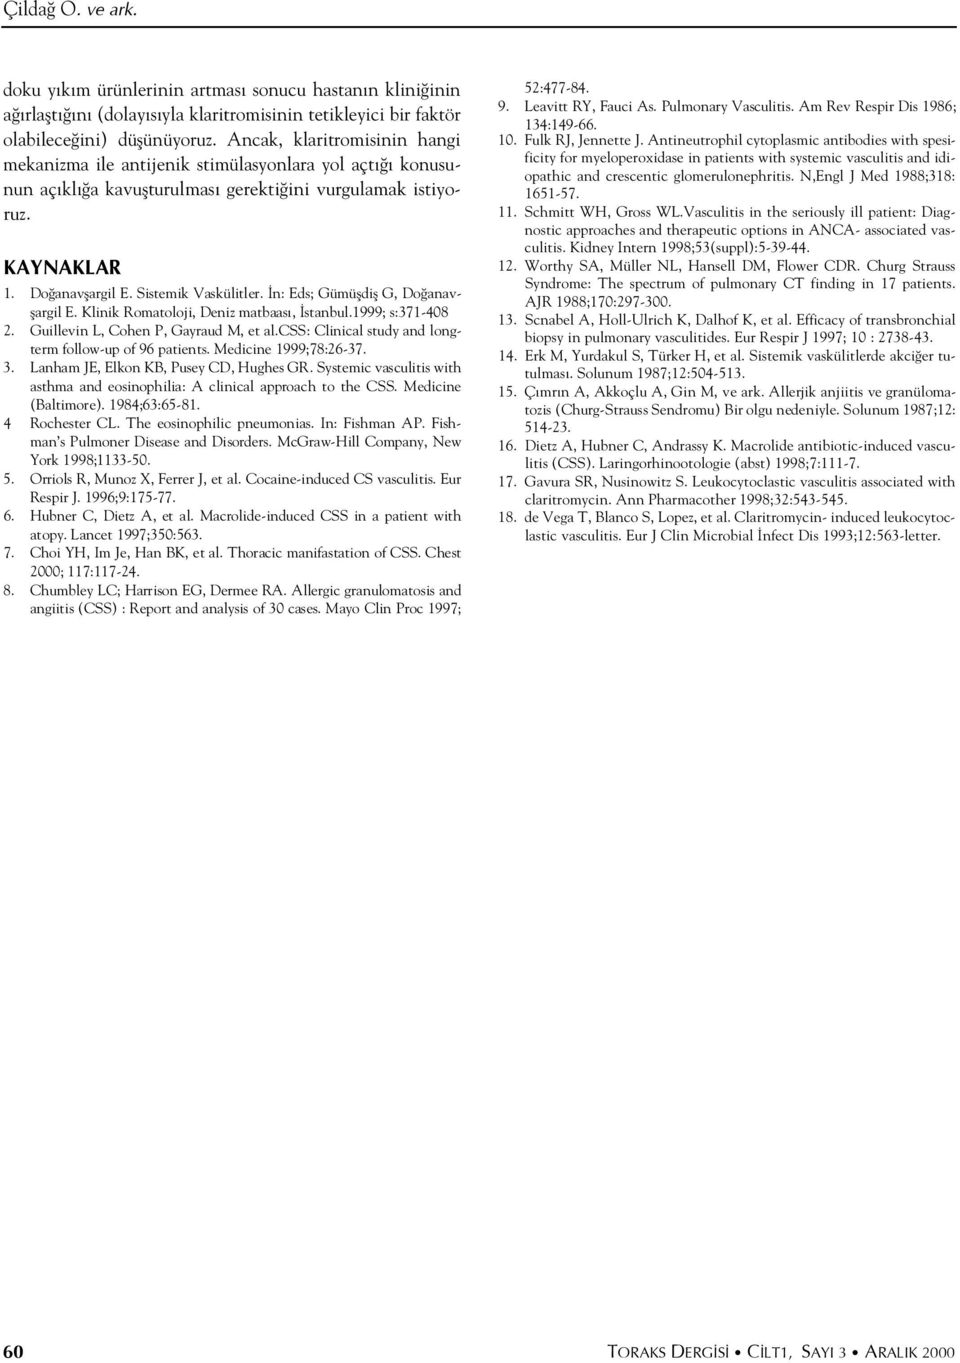 n: Eds; Gümüfldifl G, Do anavflargil E. Klinik Romatoloji, Deniz matbaas, stanbul.1999; s:371-408 2. Guillevin L, Cohen P, Gayraud M, et al.css: Clinical study and longterm follow-up of 96 patients.